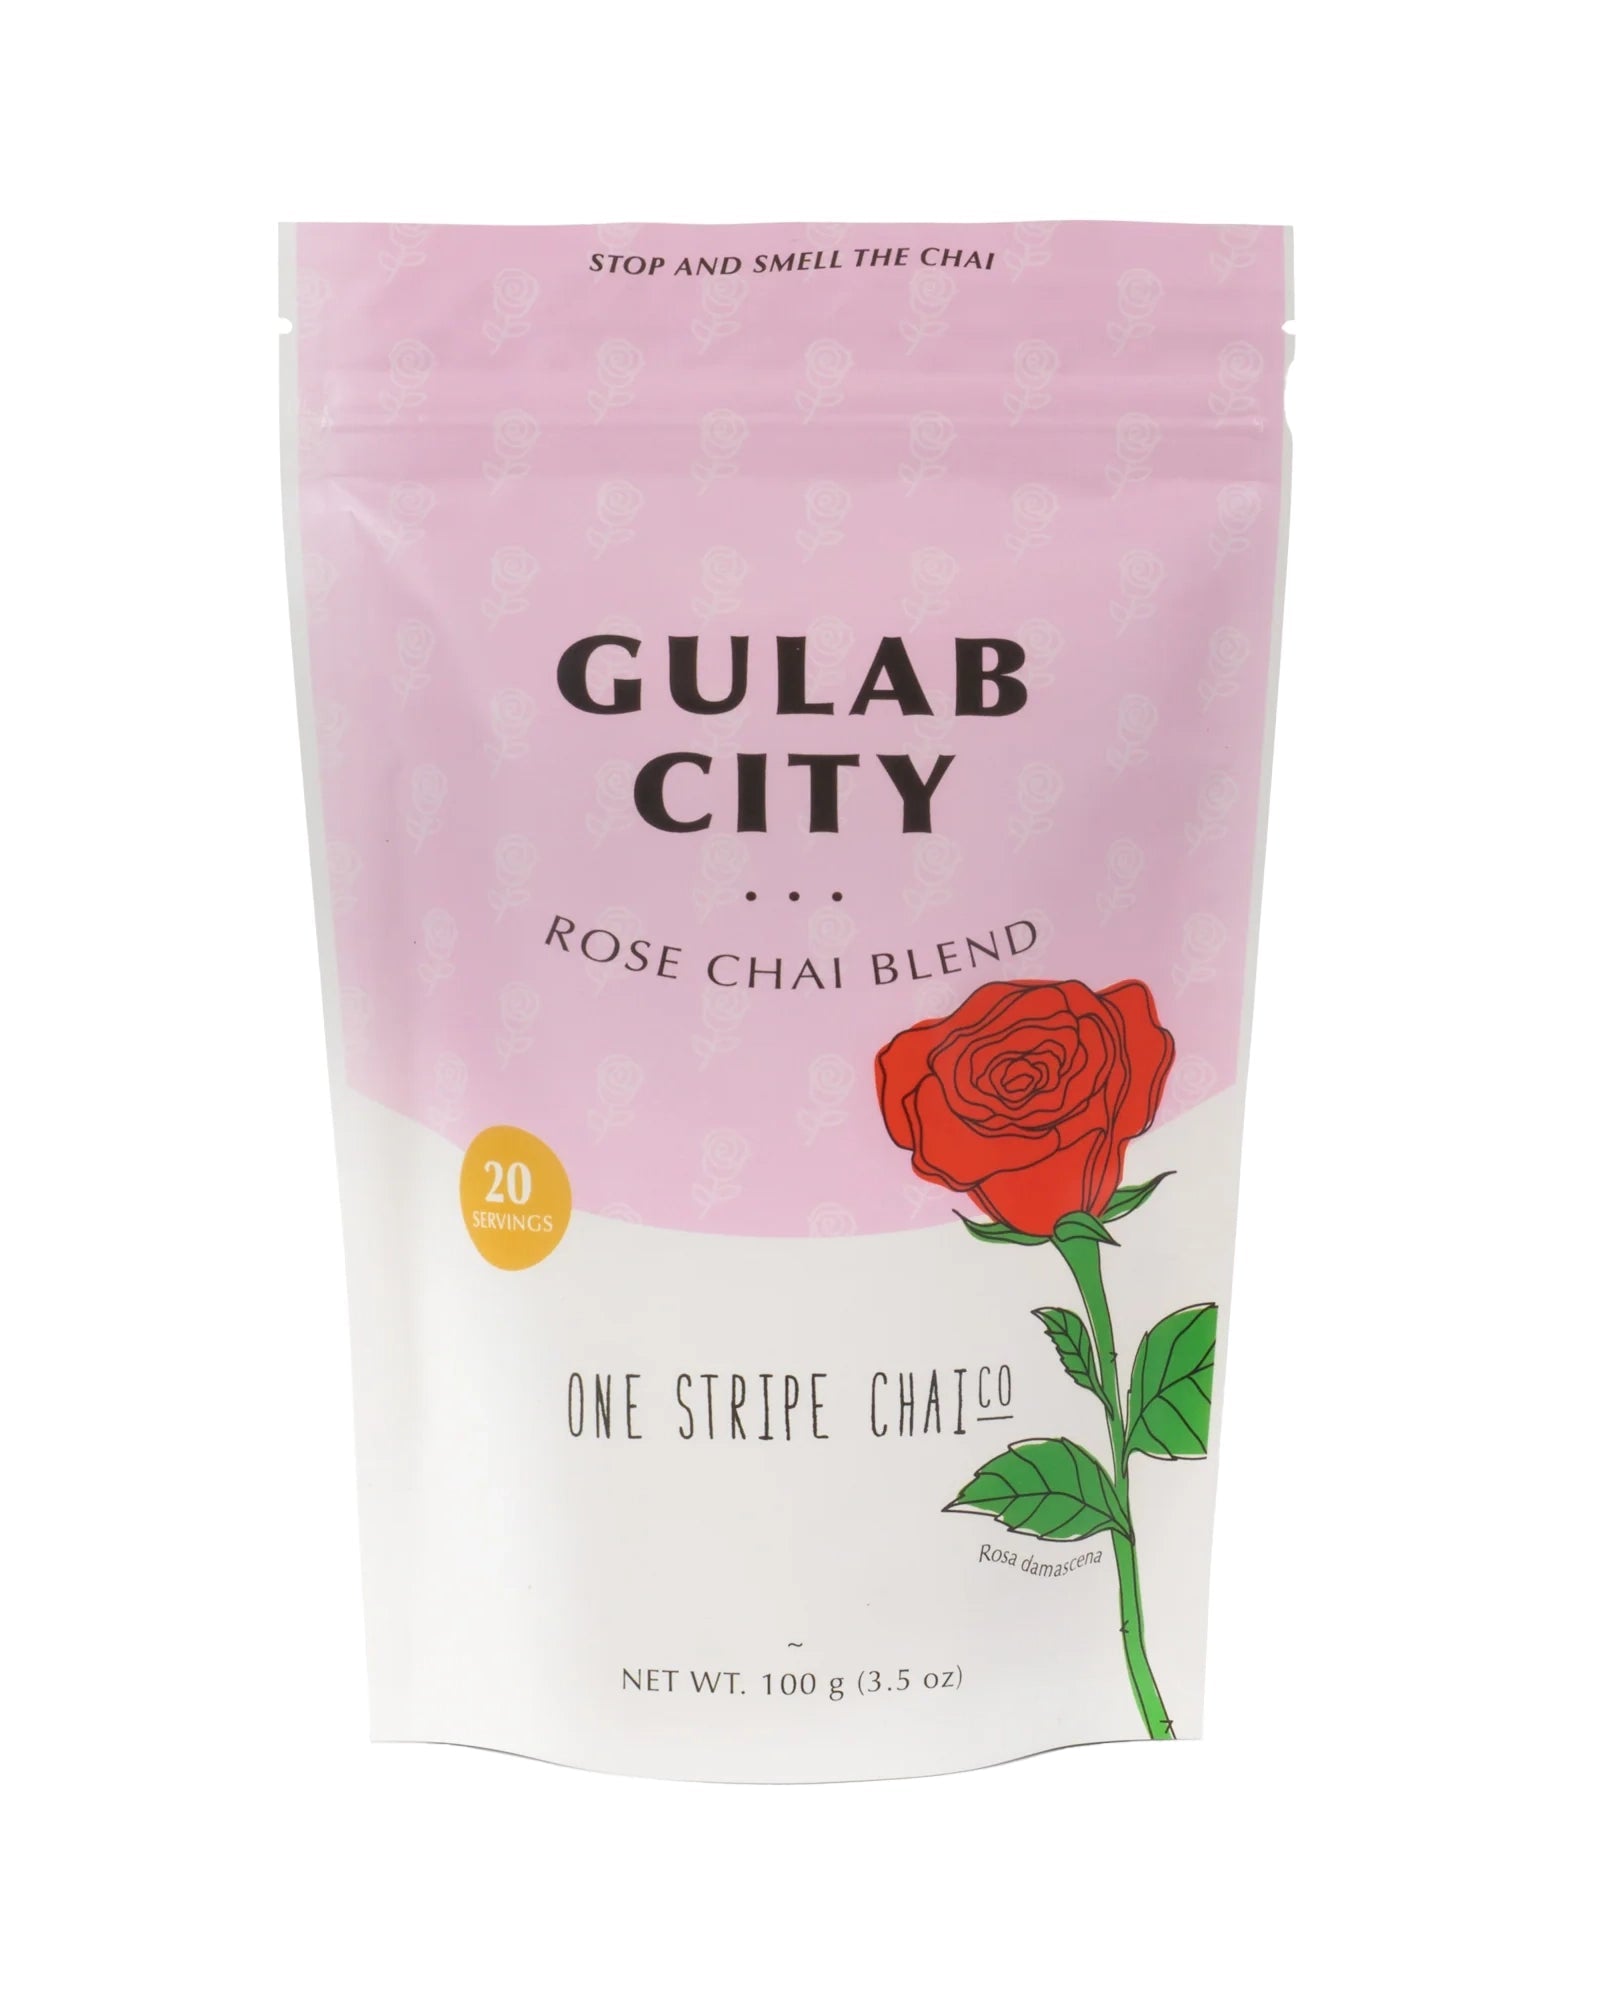 One Stripe Chai Co. Gulab City - Ordinary Habit